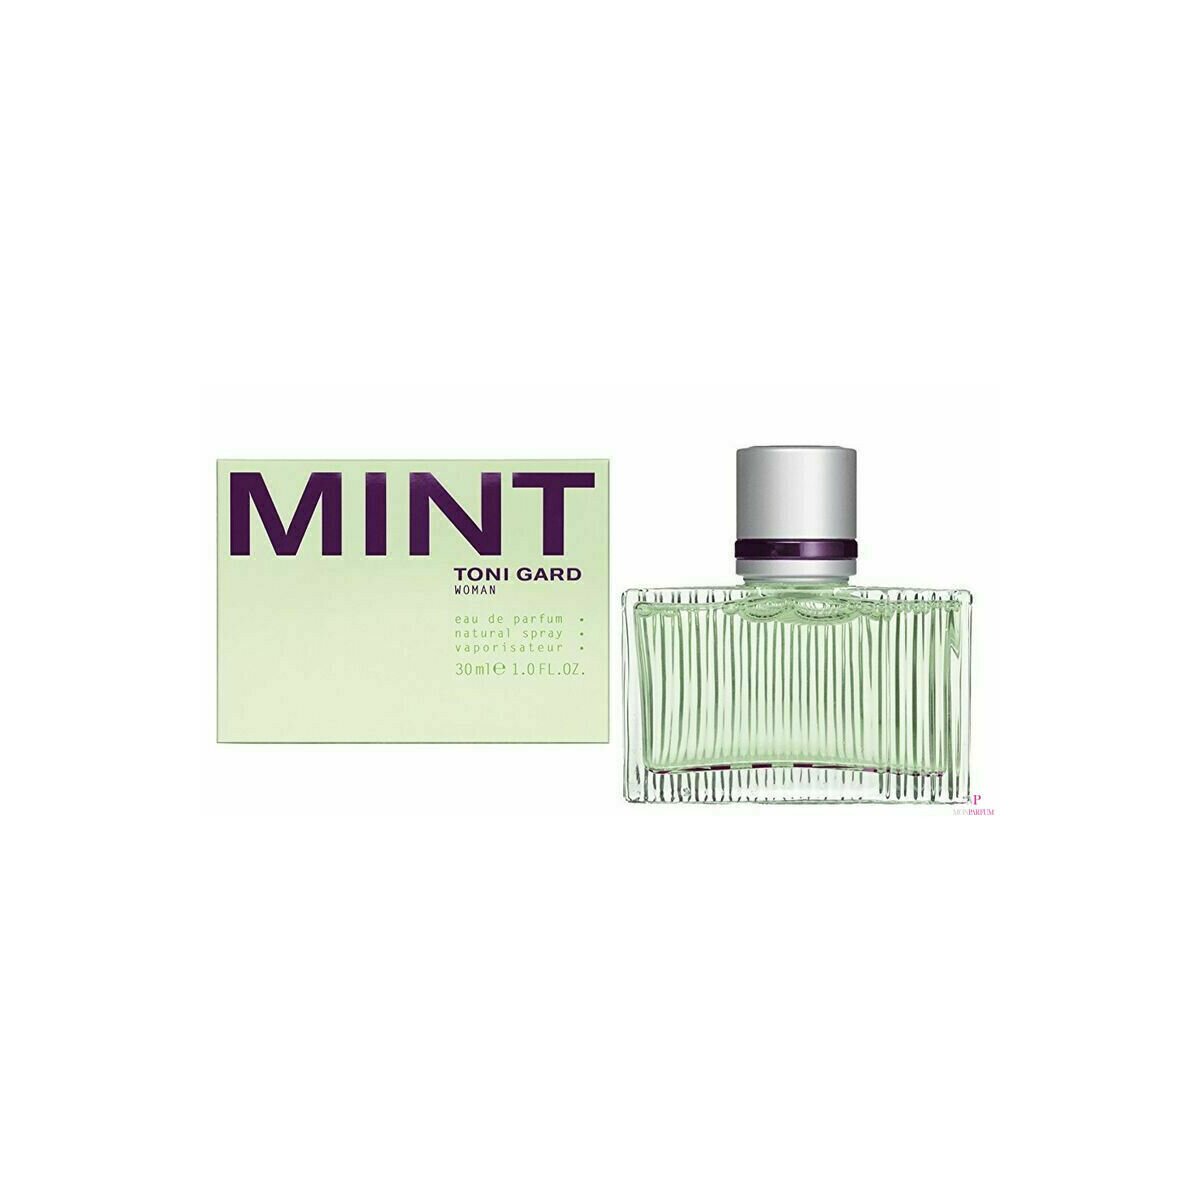 Toni Gard Mint Woman Eau de Parfum 30ml, 25,00 €